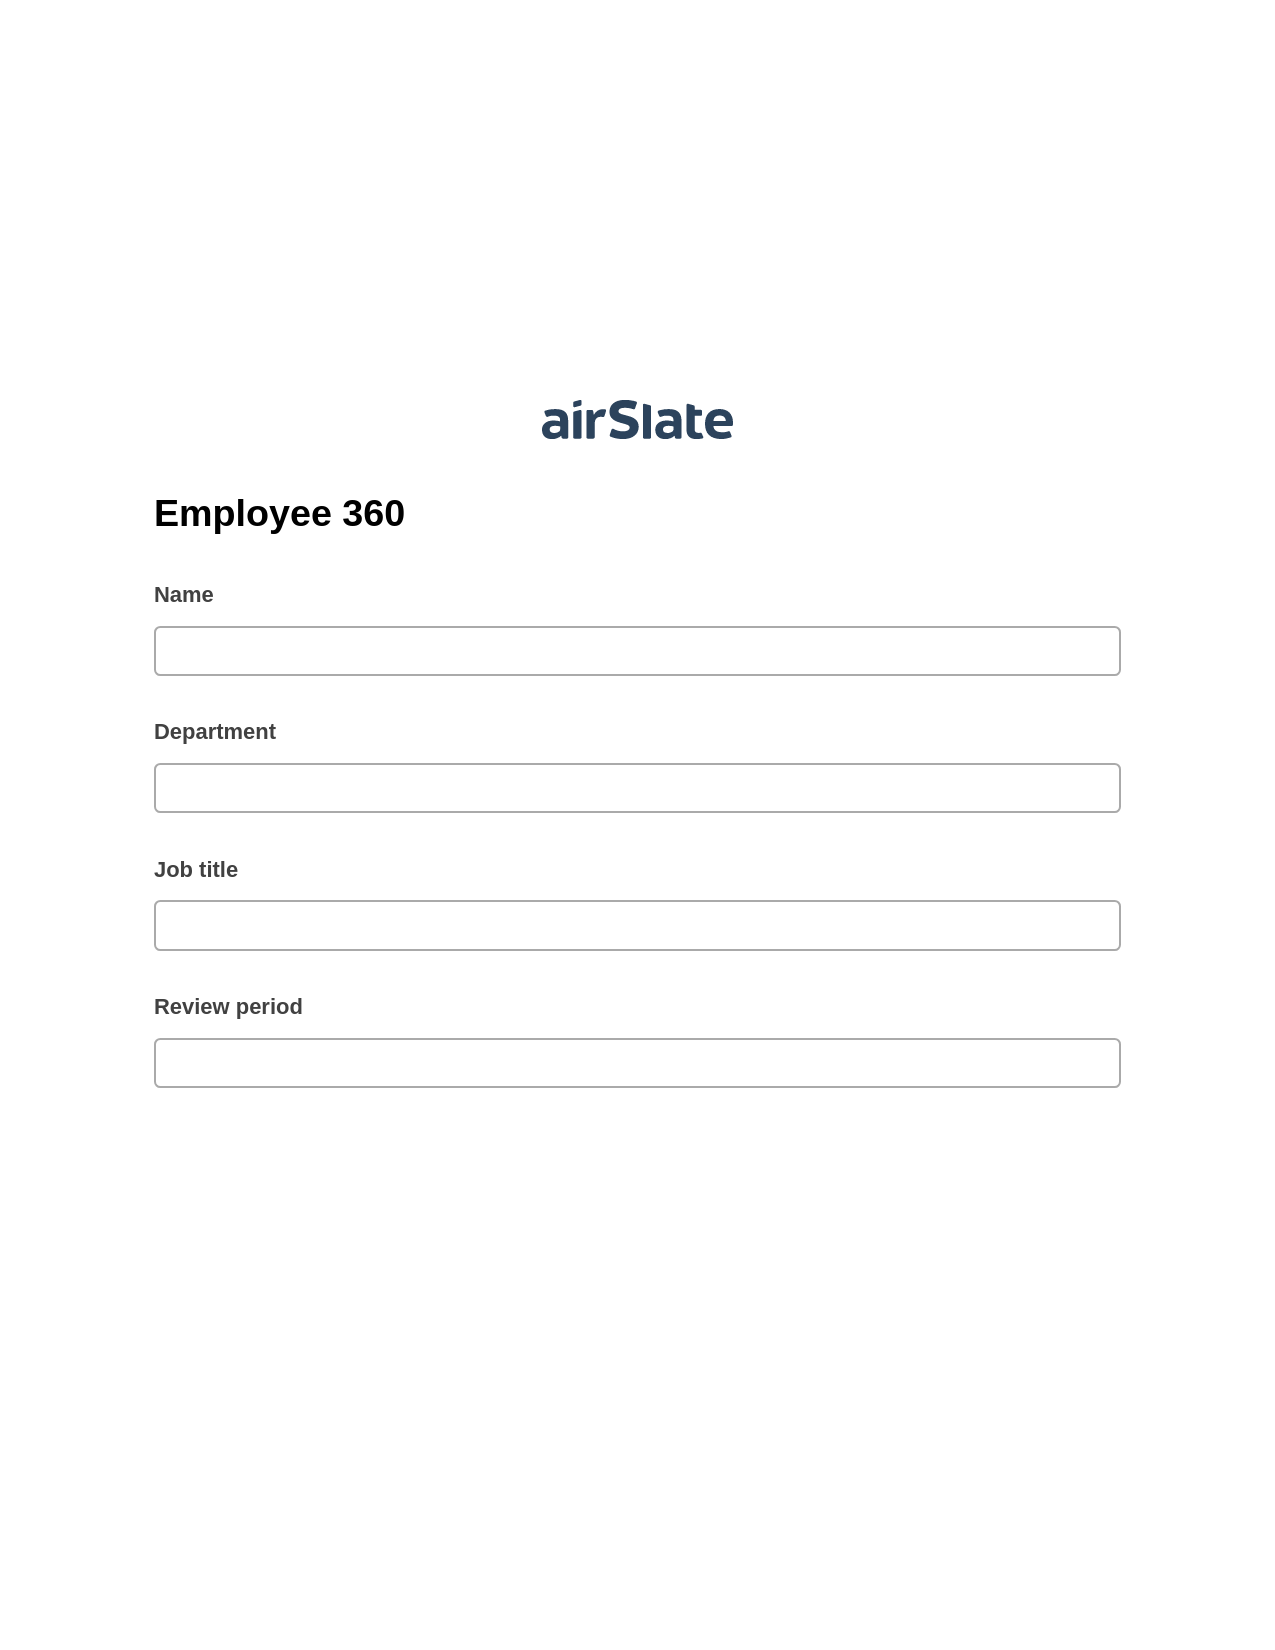 Employee 360 Pre-fill Dropdowns from Airtable, Invoke Salesforce Process Bot, Webhook Postfinish Bot